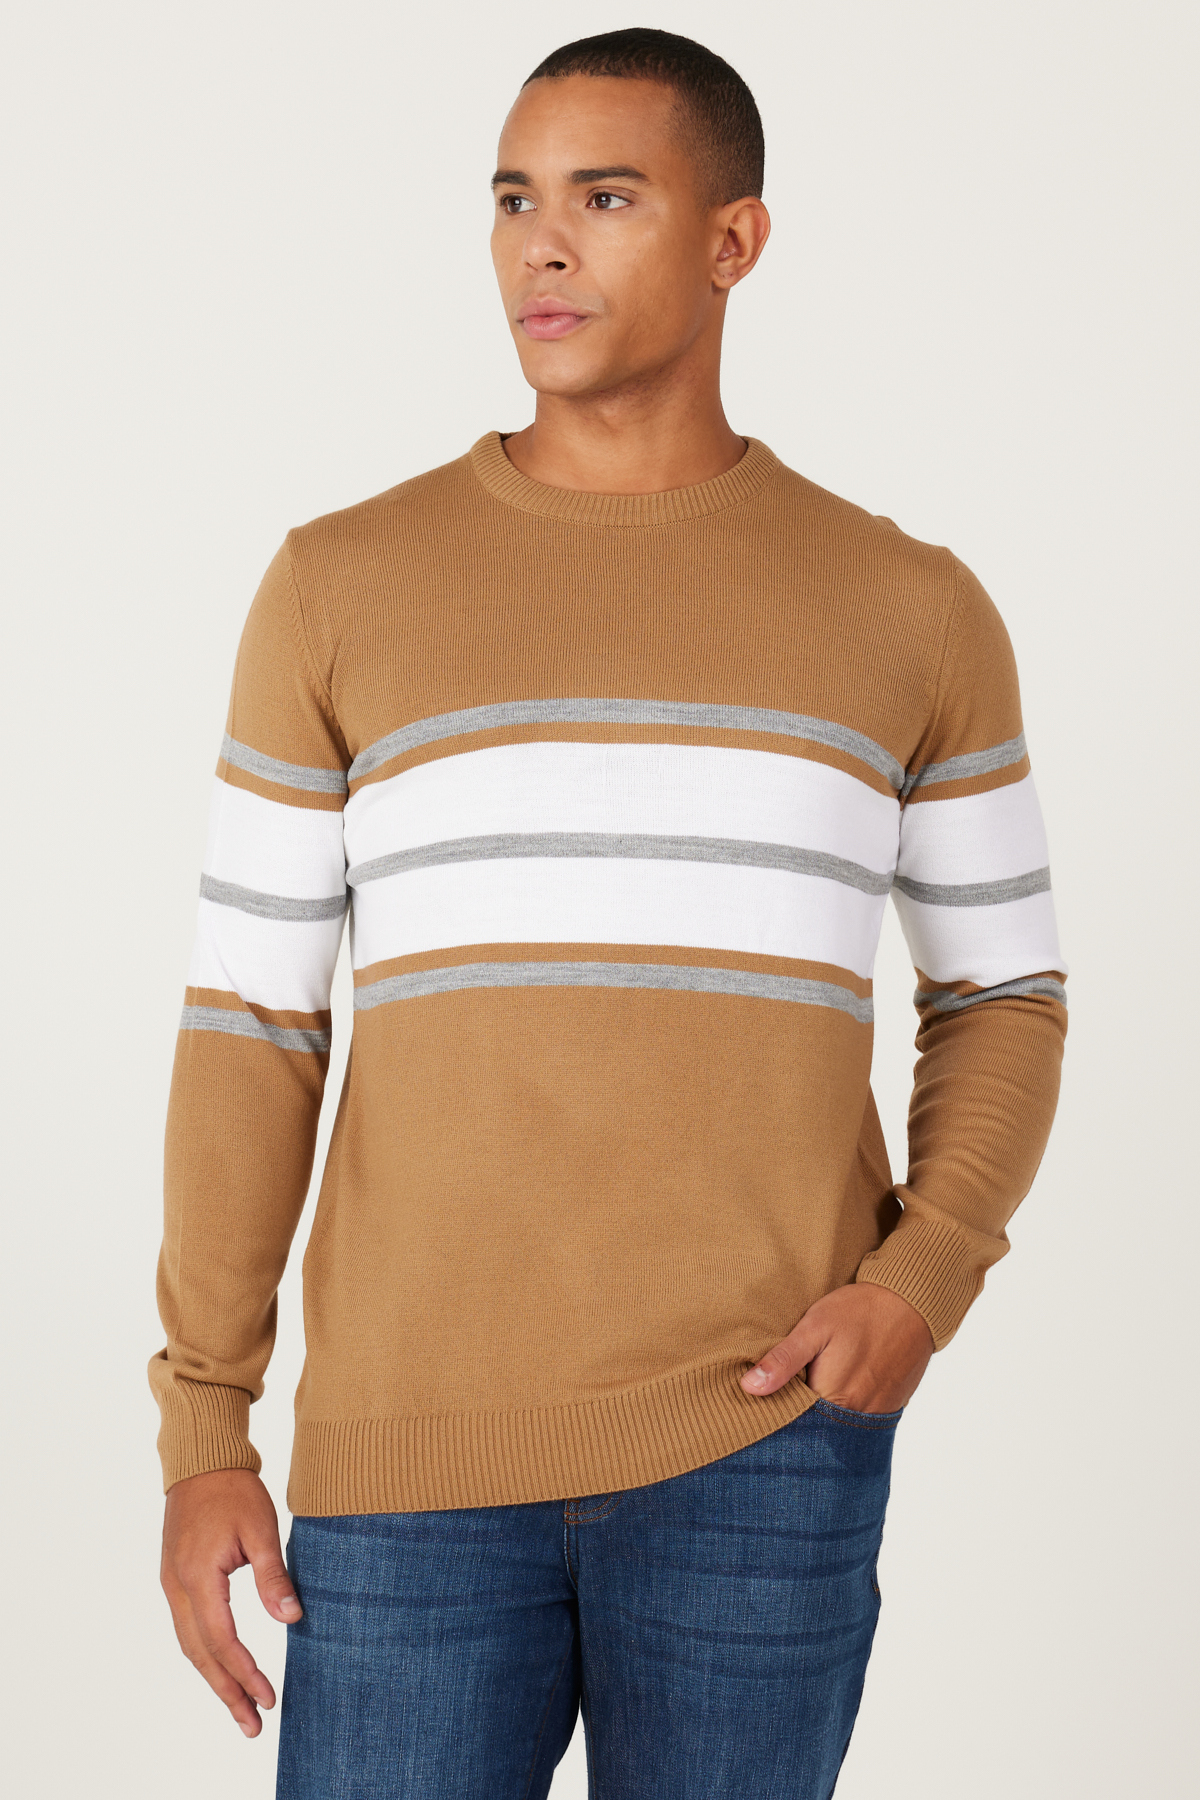 ALTINYILDIZ CLASSICS Men's Light Brown-Cream Standard Fit Regular Fit Crew Neck Striped Knitwear Sweater